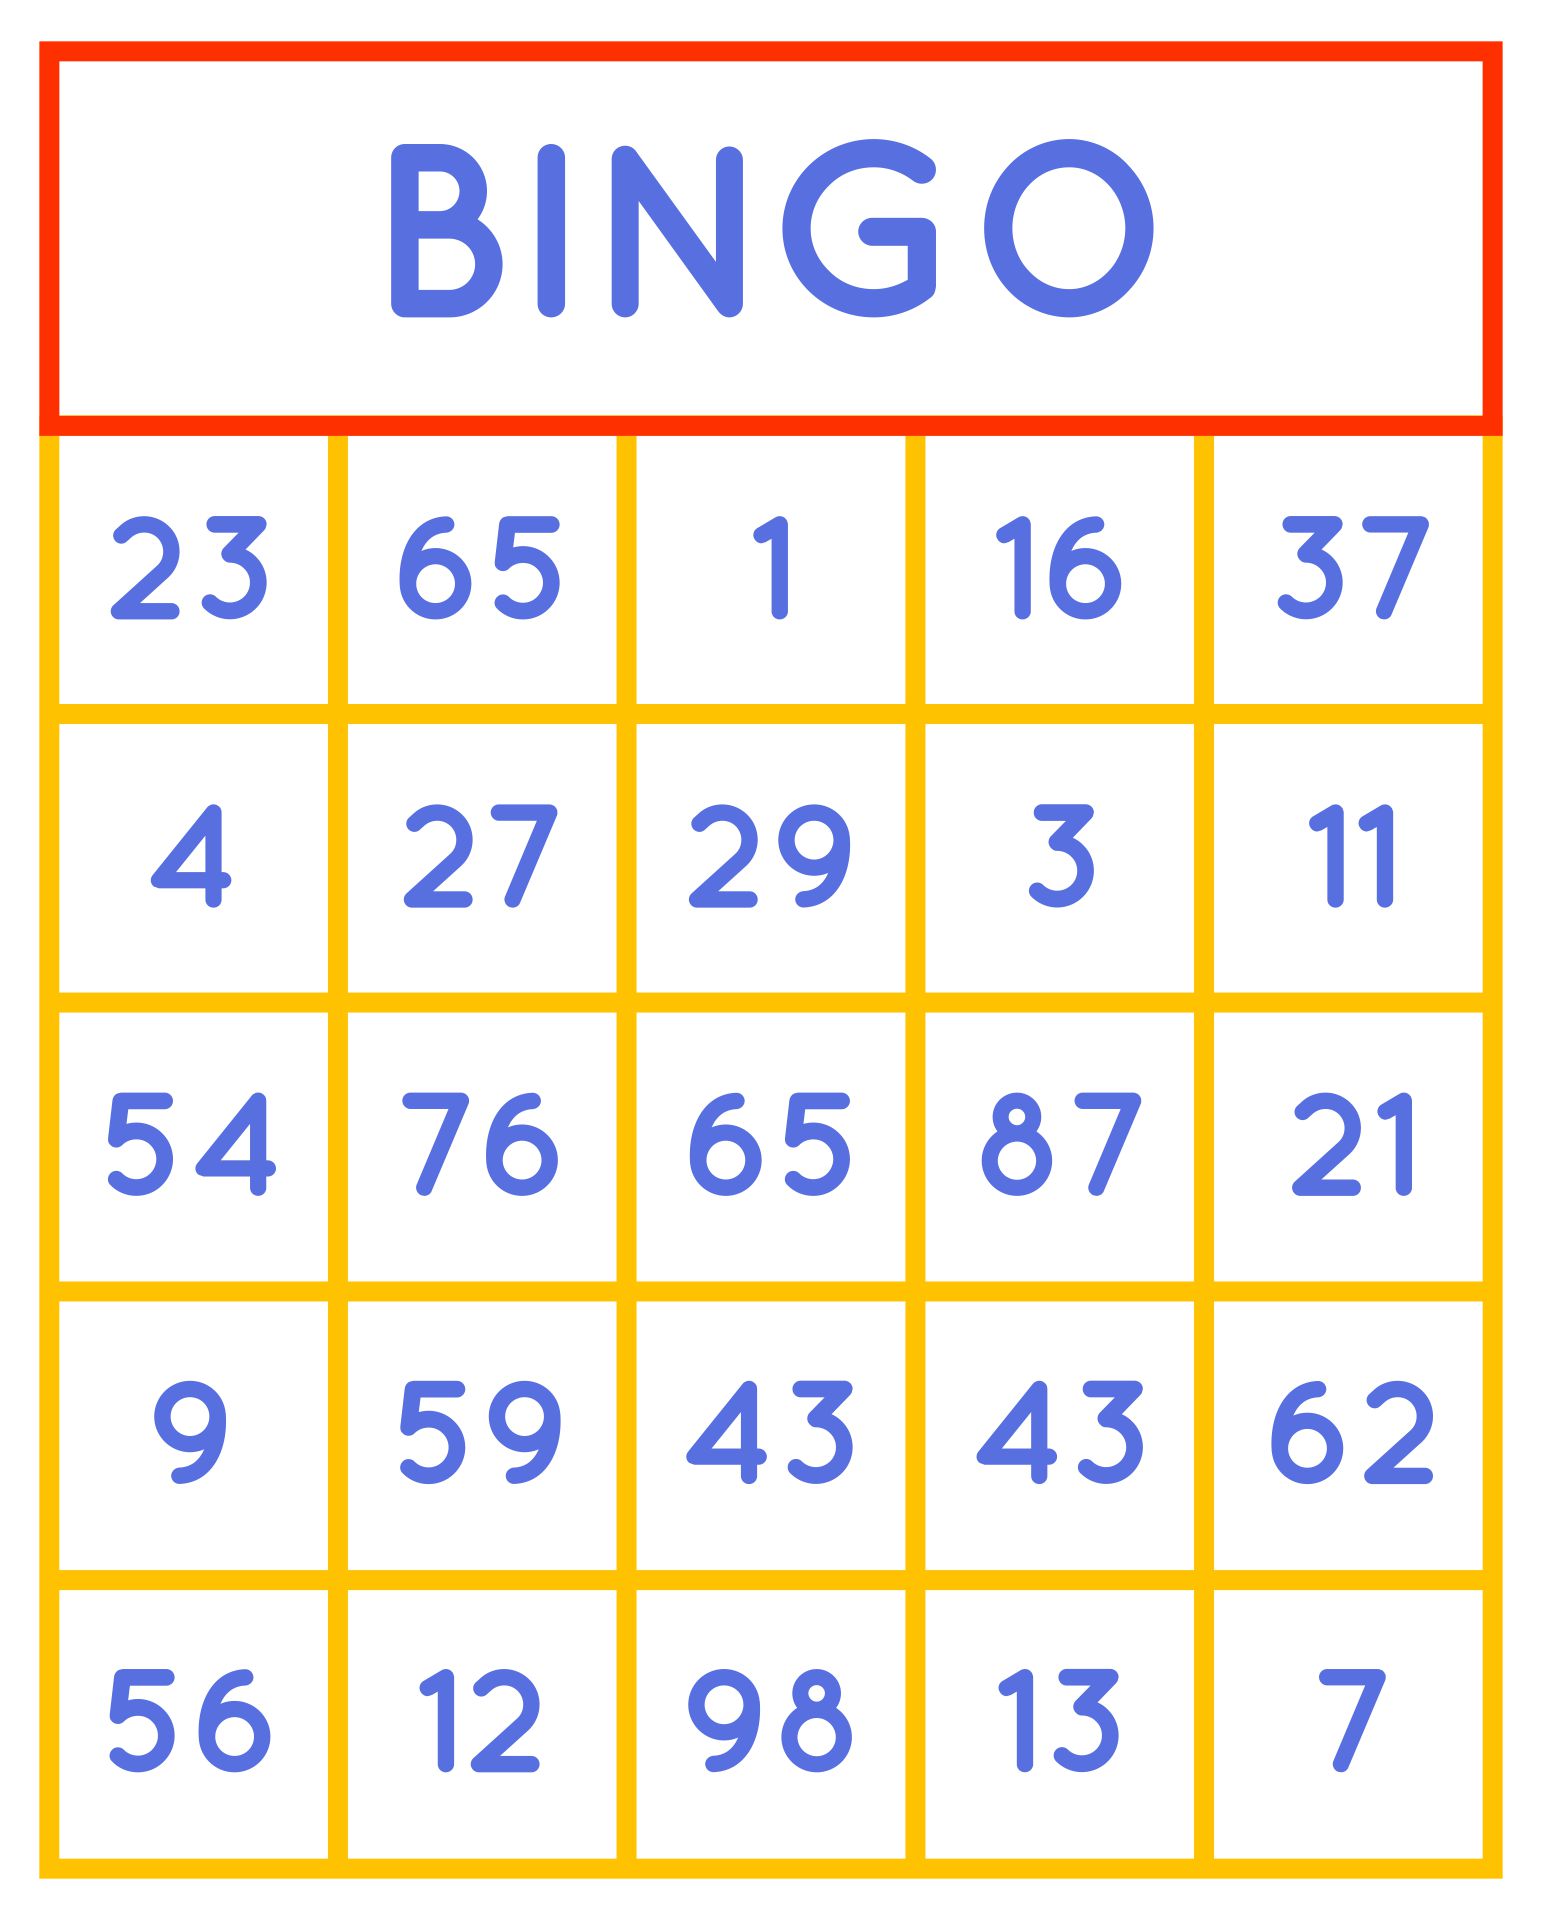 number-bingo-game-printable-images-and-photos-finder-gambaran